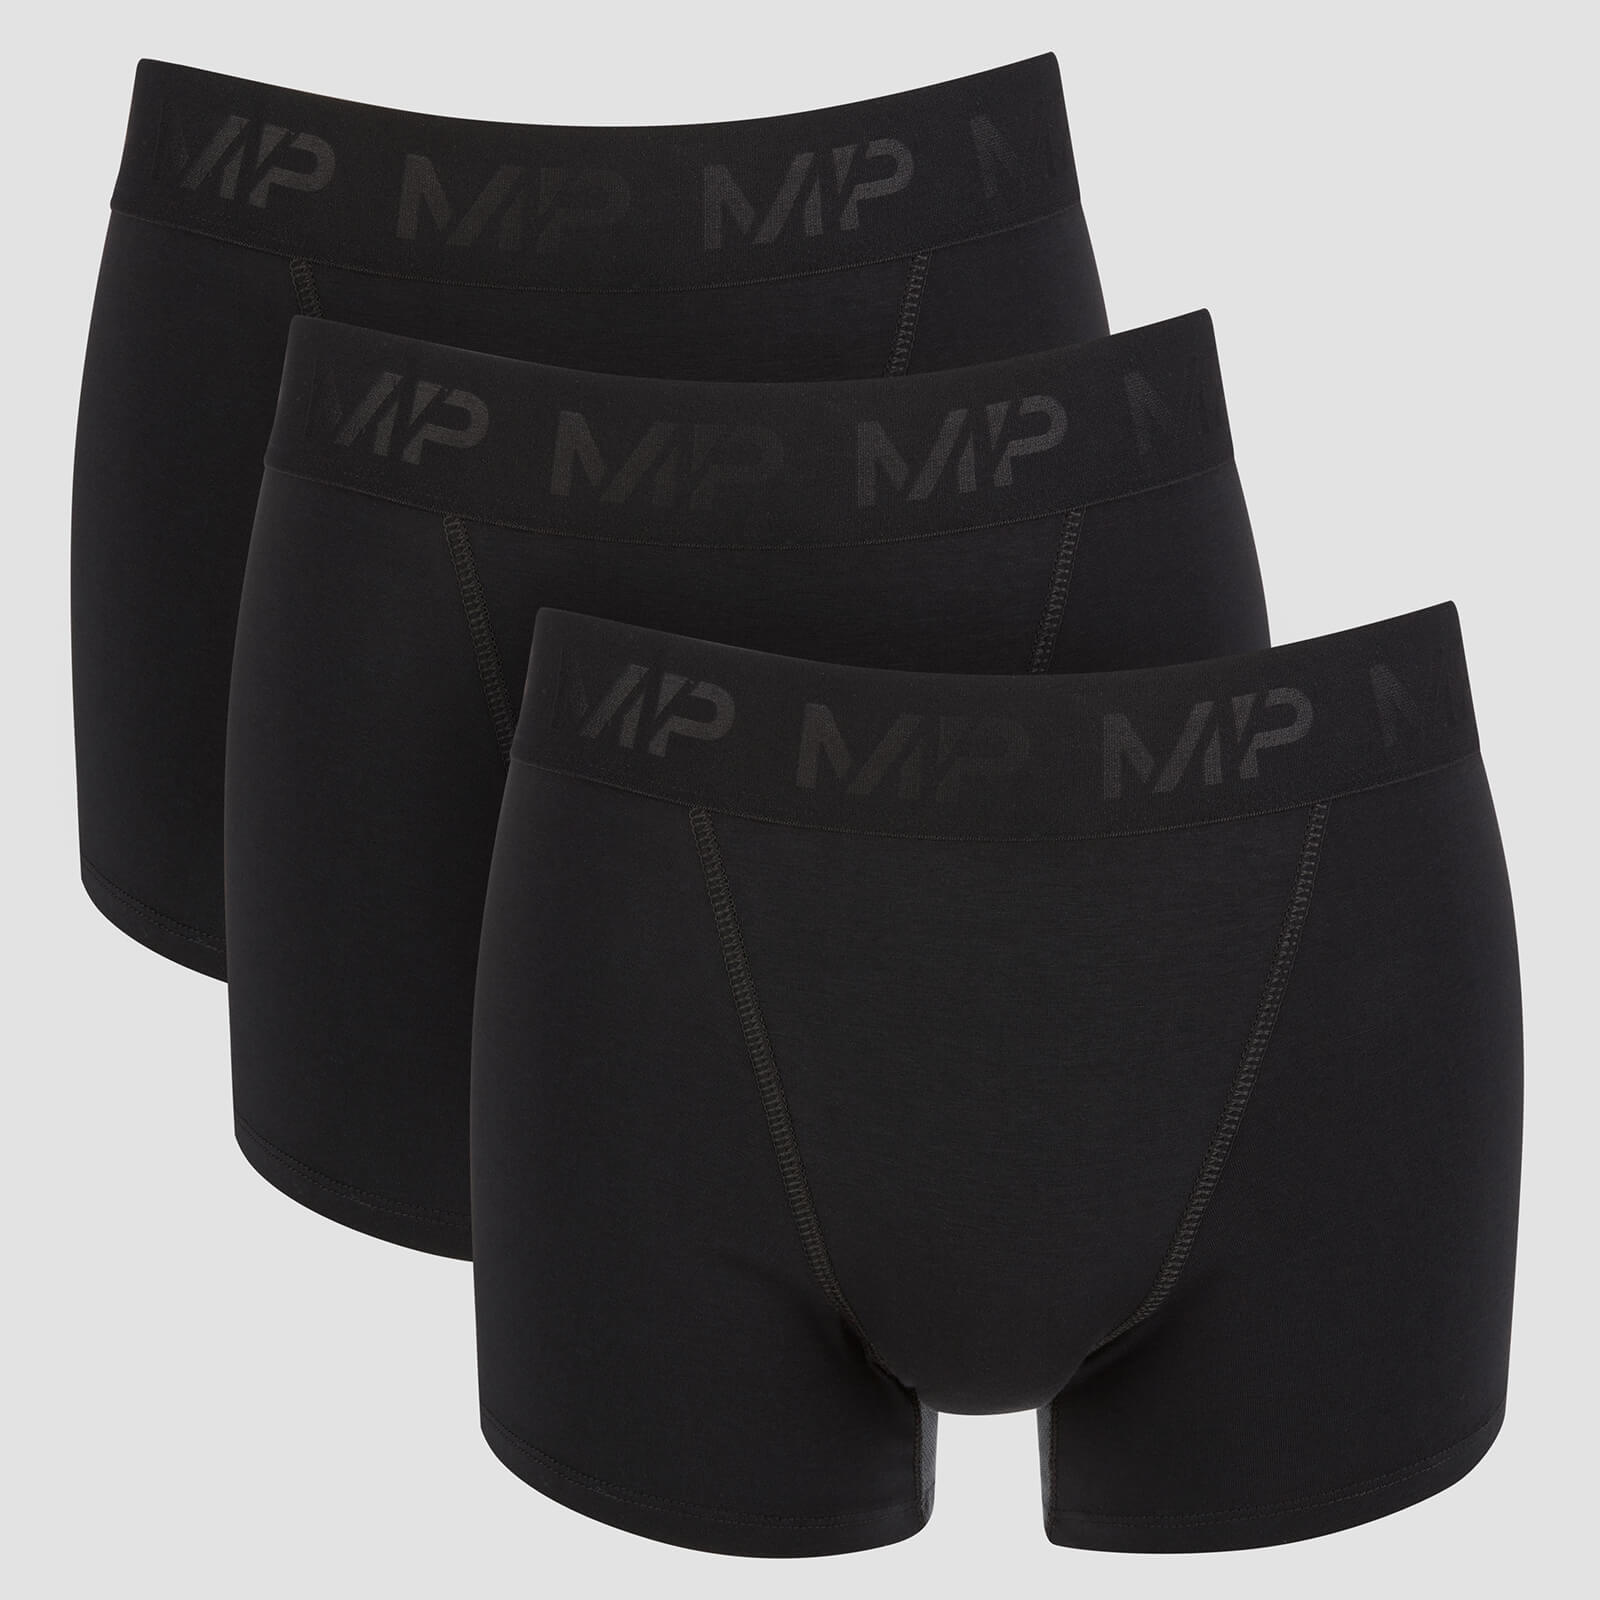 MP Men's Training Boxers - Black (3 Pack) - M